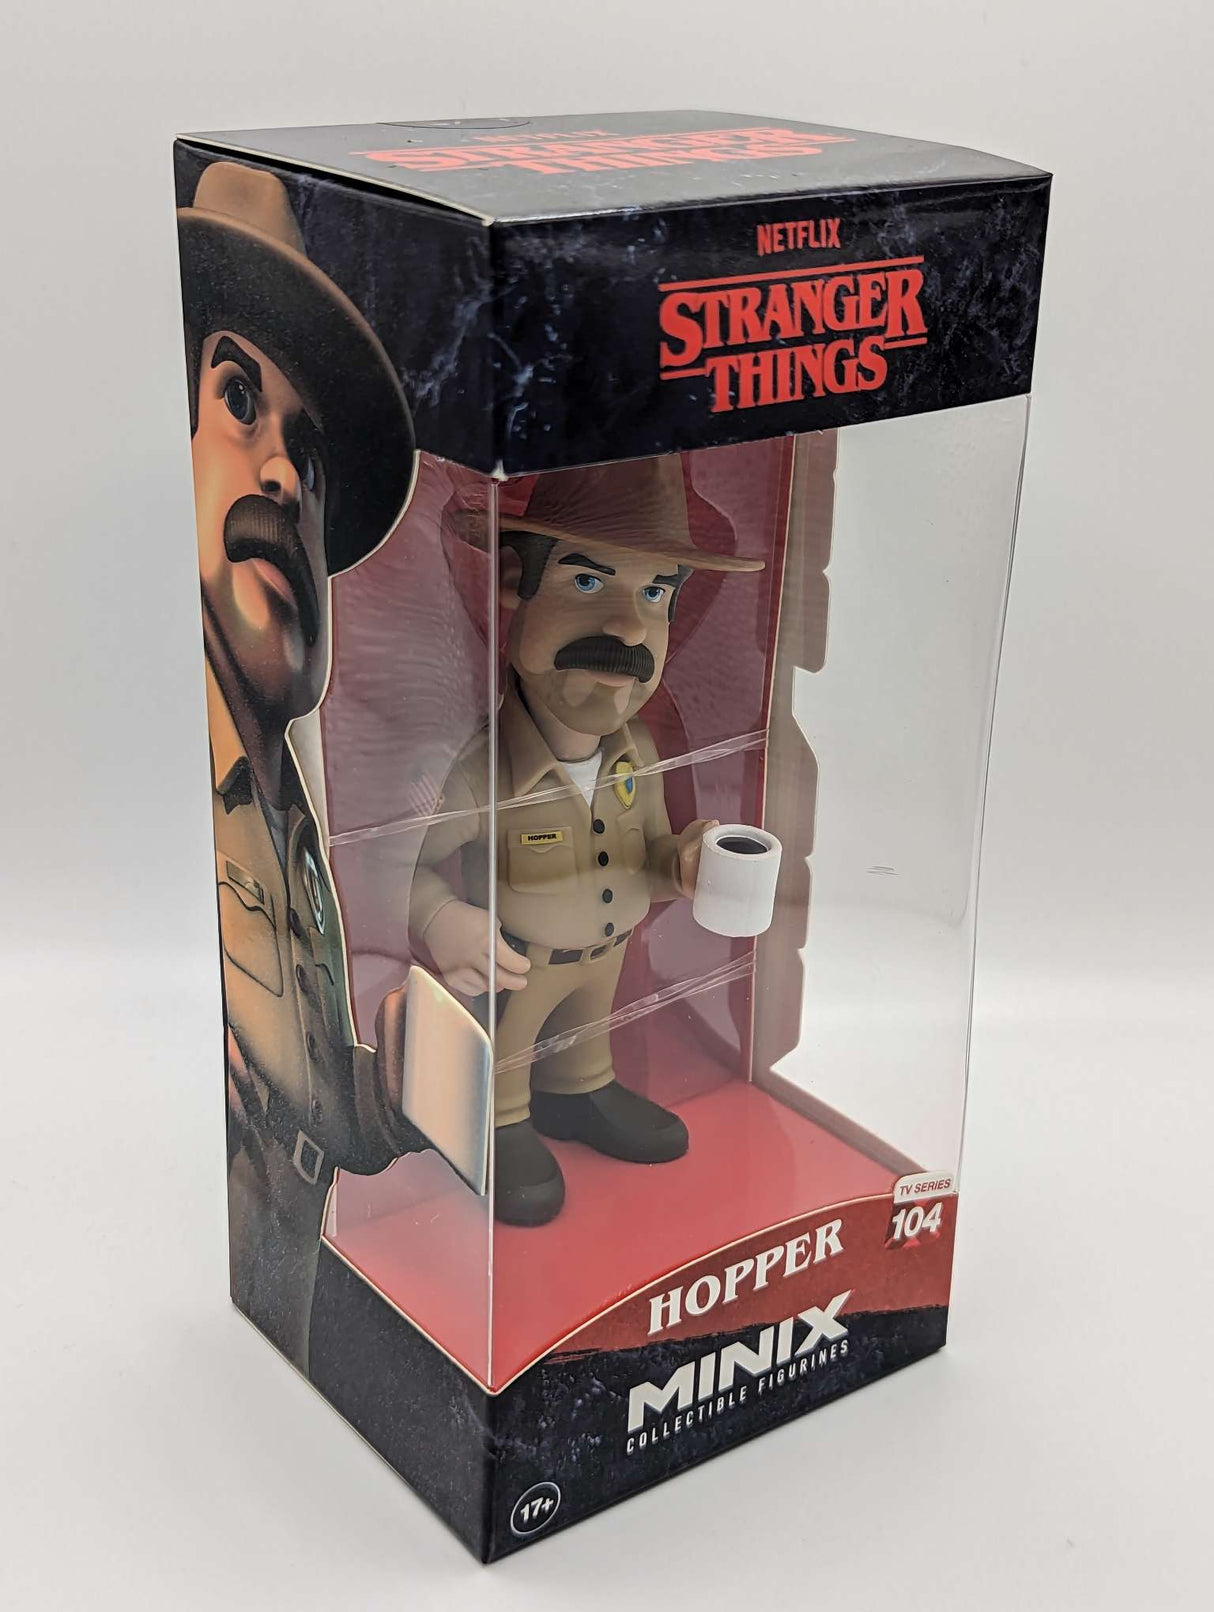 Damaged Box | Minix | Stranger Things | Hopper #104